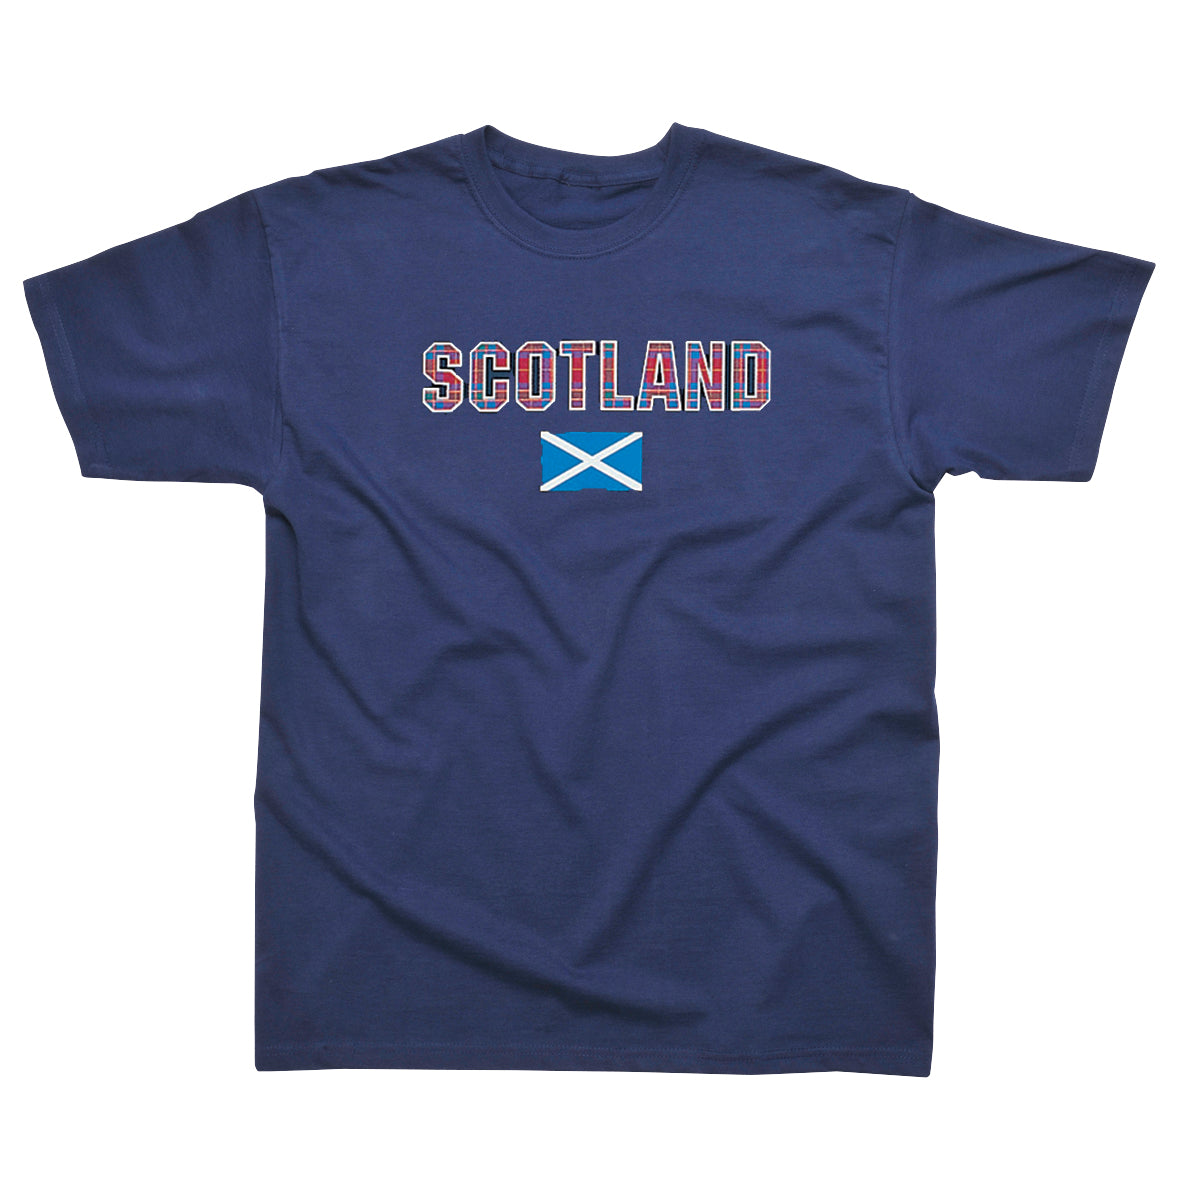 Scotland Flag Children’s Navy T-Shirt Age 7-8